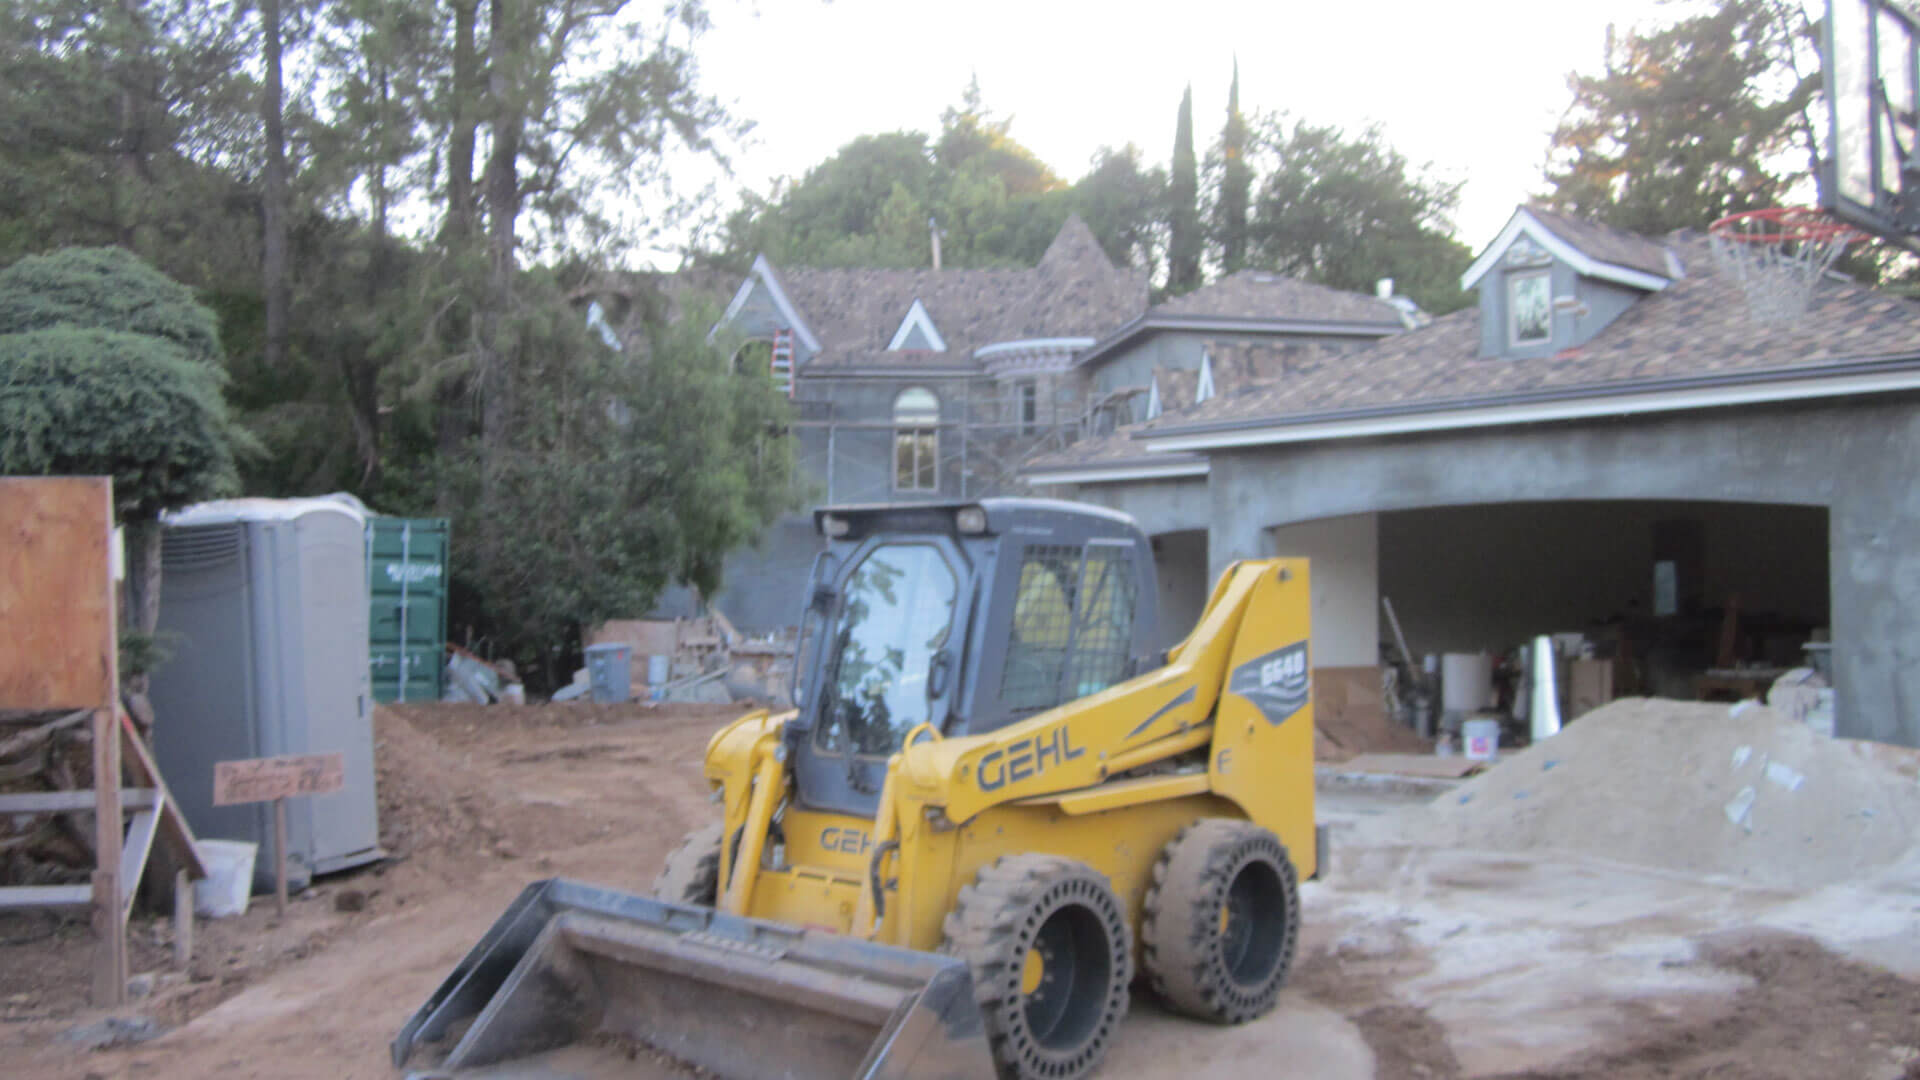 Santa Clara Landscaping Company, Concrete Contractor and Landscaper